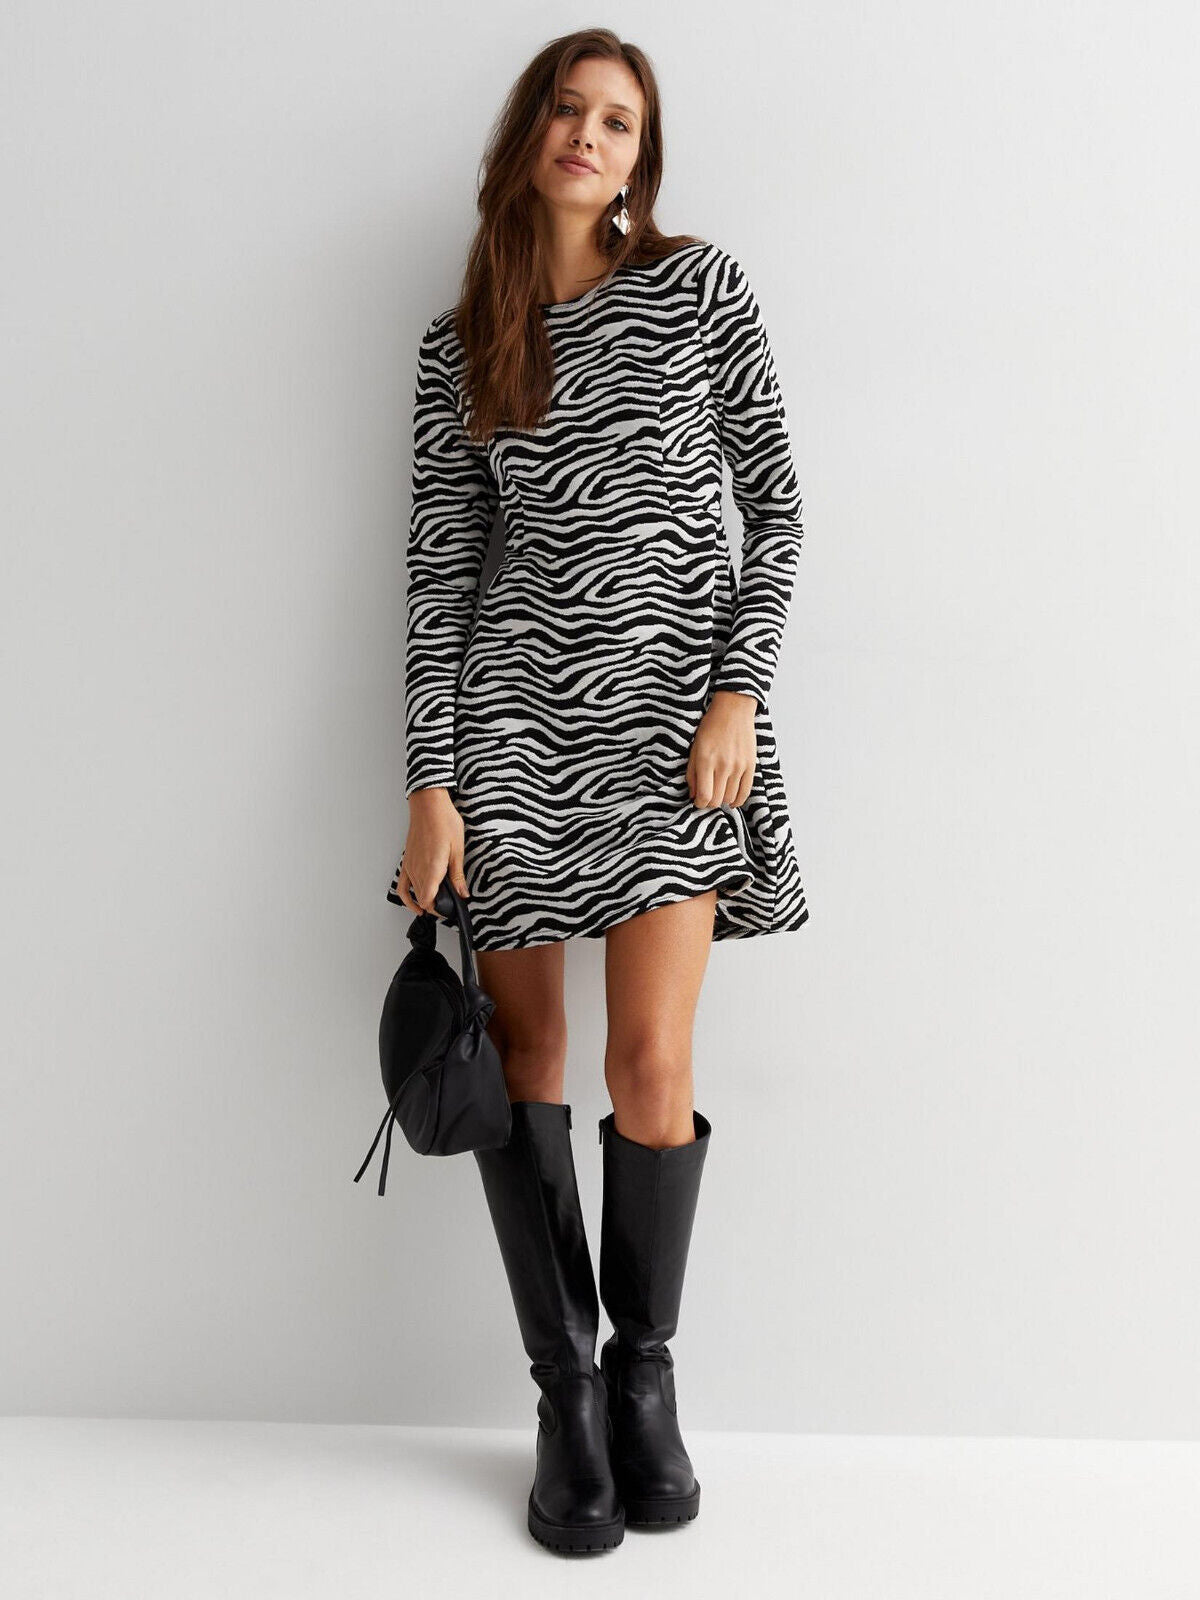 New Look Black Zebra Print Jacquard Jersey Mini Swing Dress Size 10 ** V347